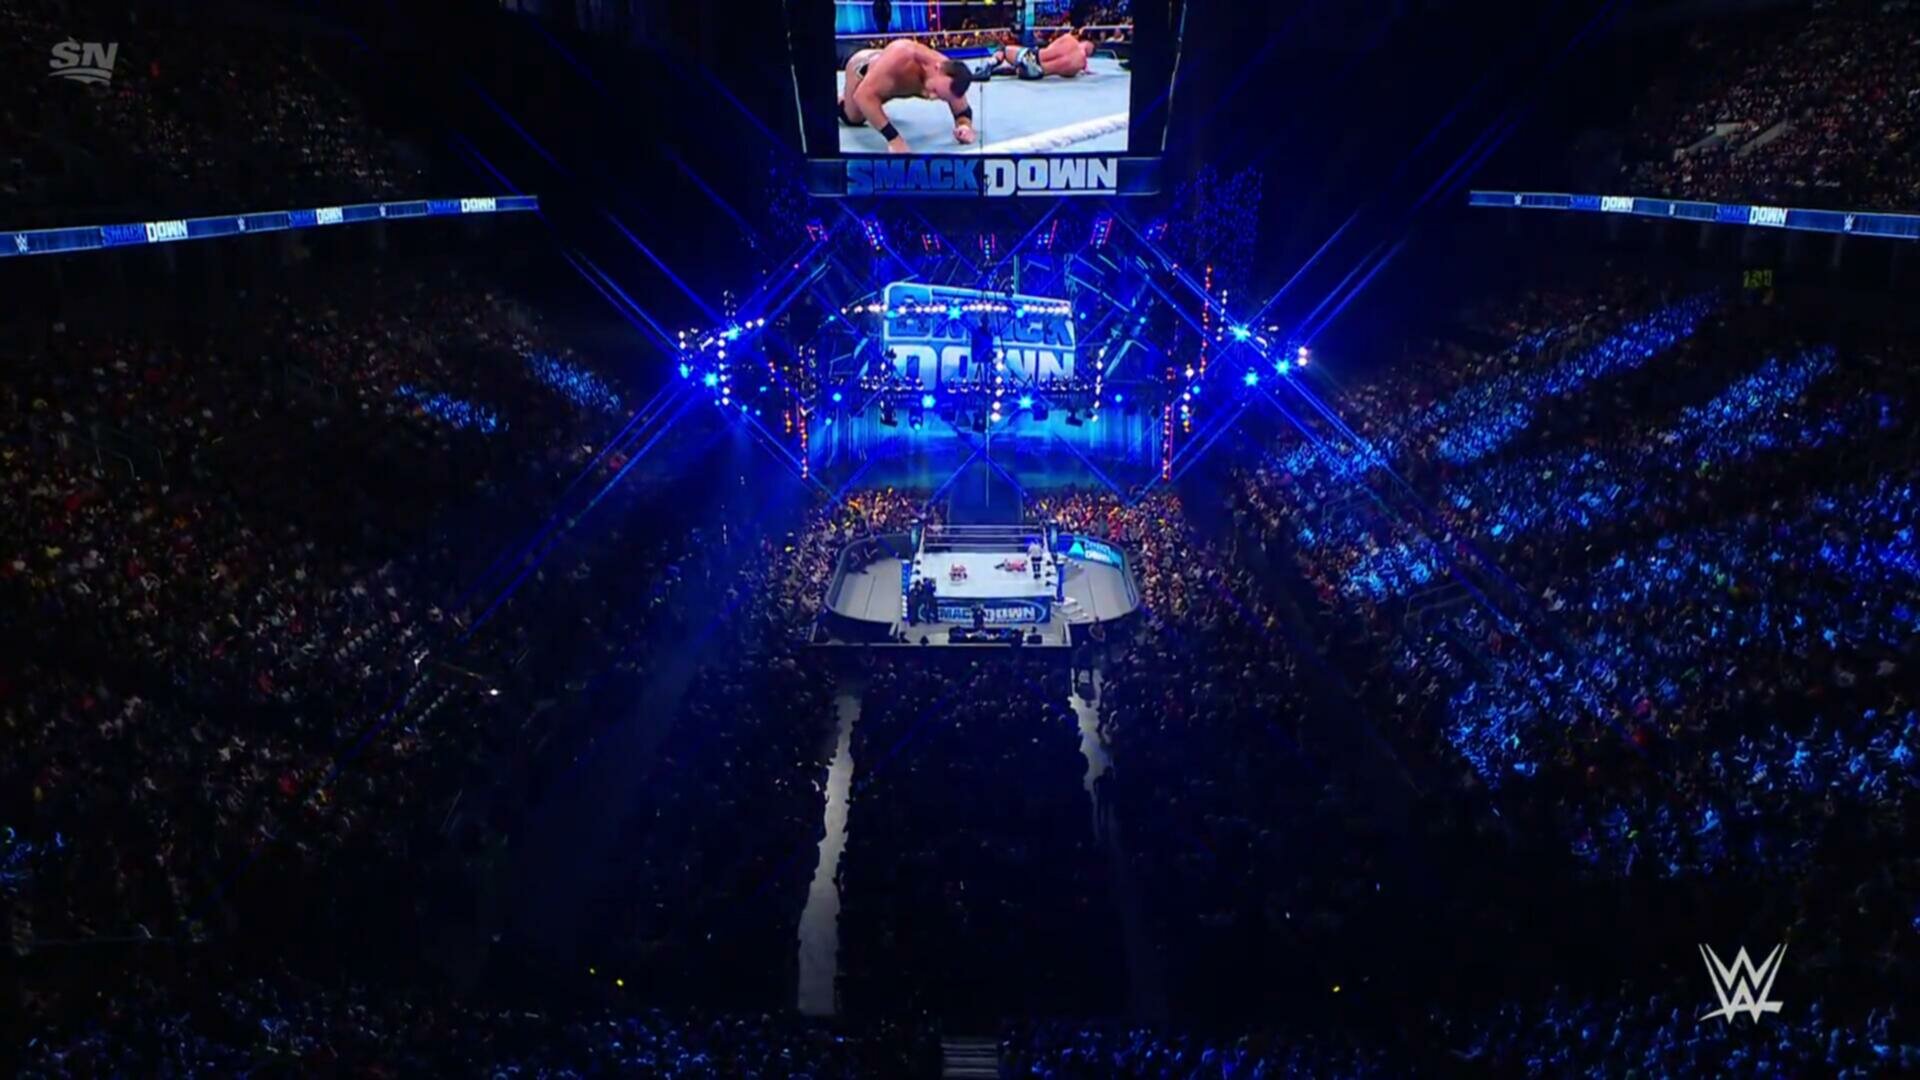 WWE SmackDown 2023 08 18 1080p HDTV h264 DOORS TGx